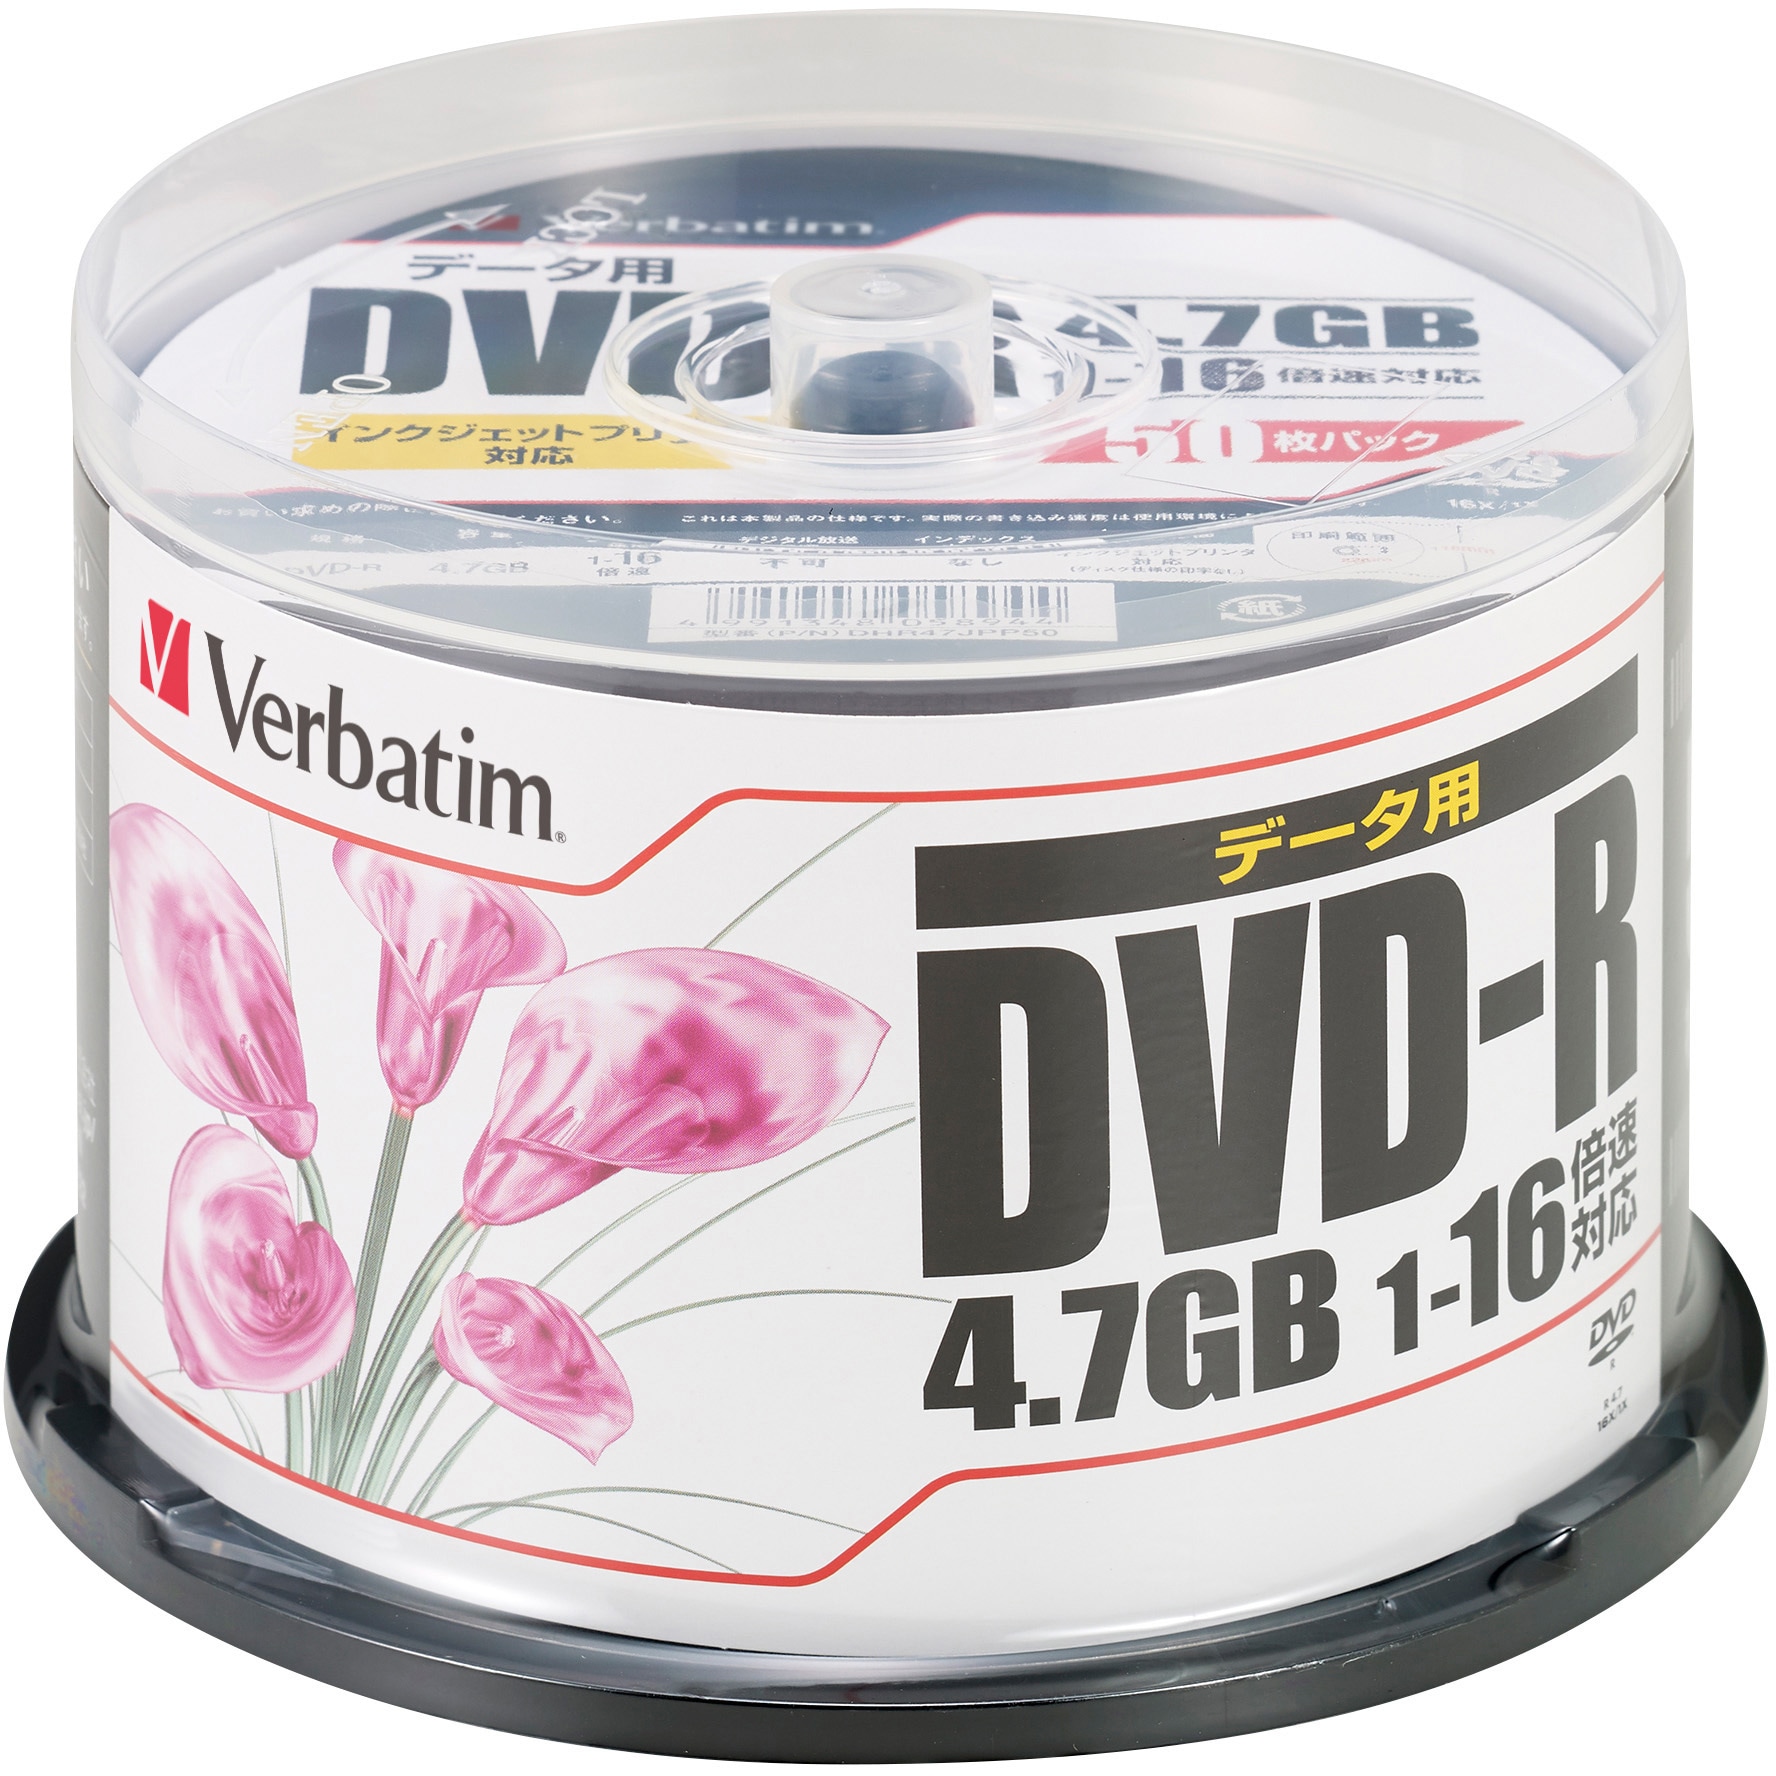 DHR47JPP50 データー用DVD-R 16倍速対応 1パック(50枚) Verbatim